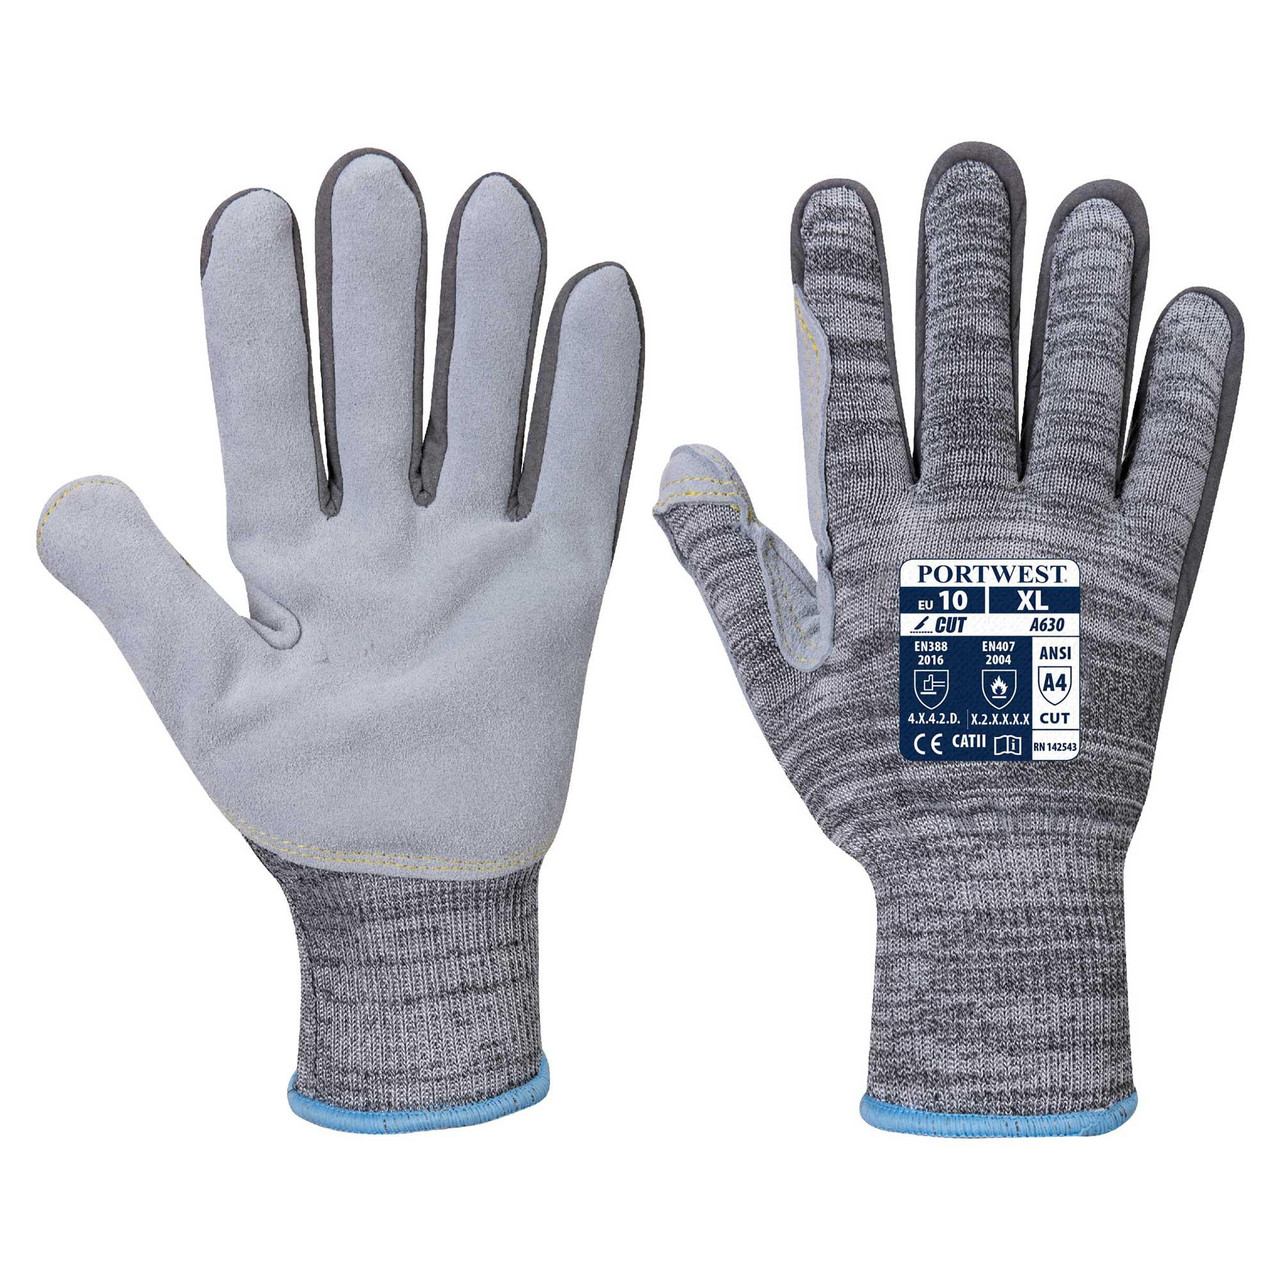 Portwest A630 Razor-Lite Leather Gloves ANSI Cut 4